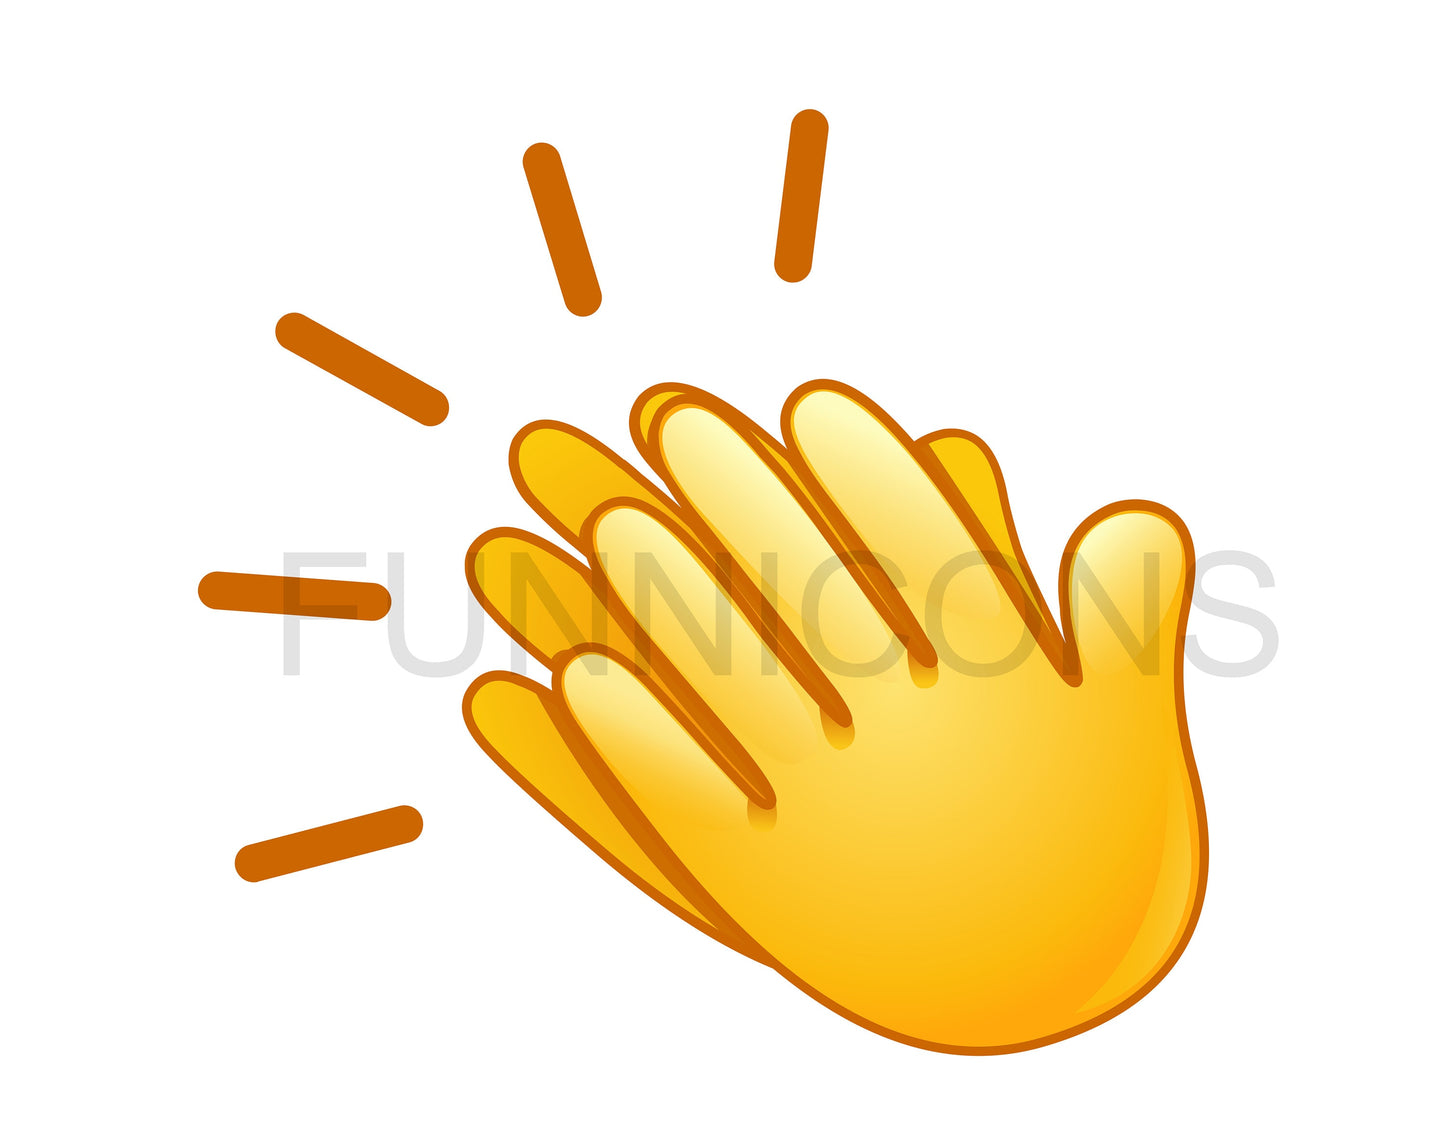 Clapping hands sign emoji set of various skin tones